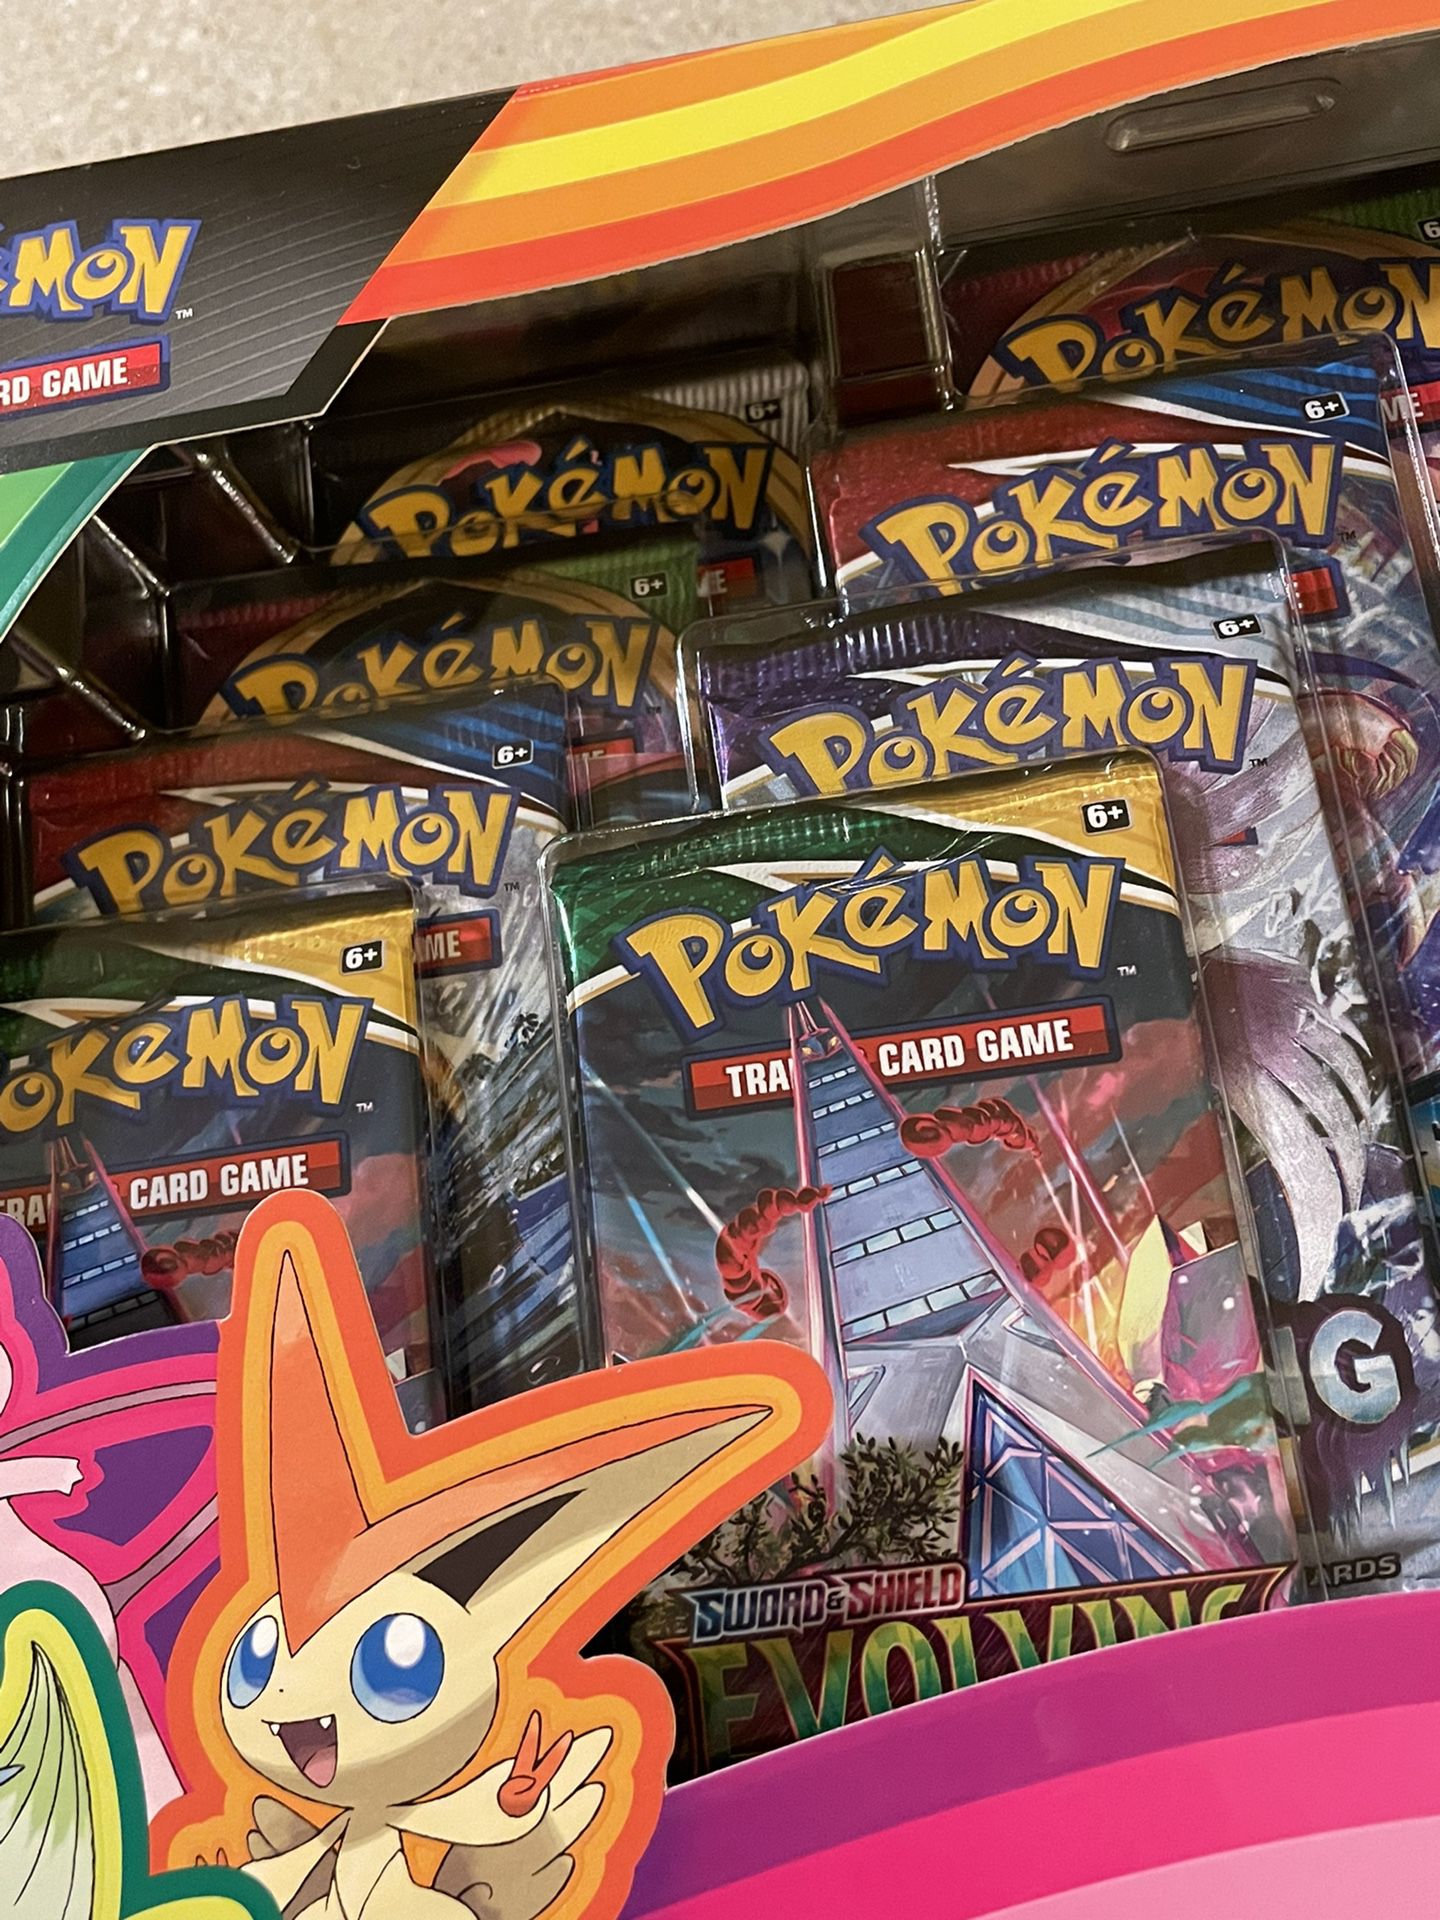 Pokémon Mythical Squishy Premium Collection Boxes